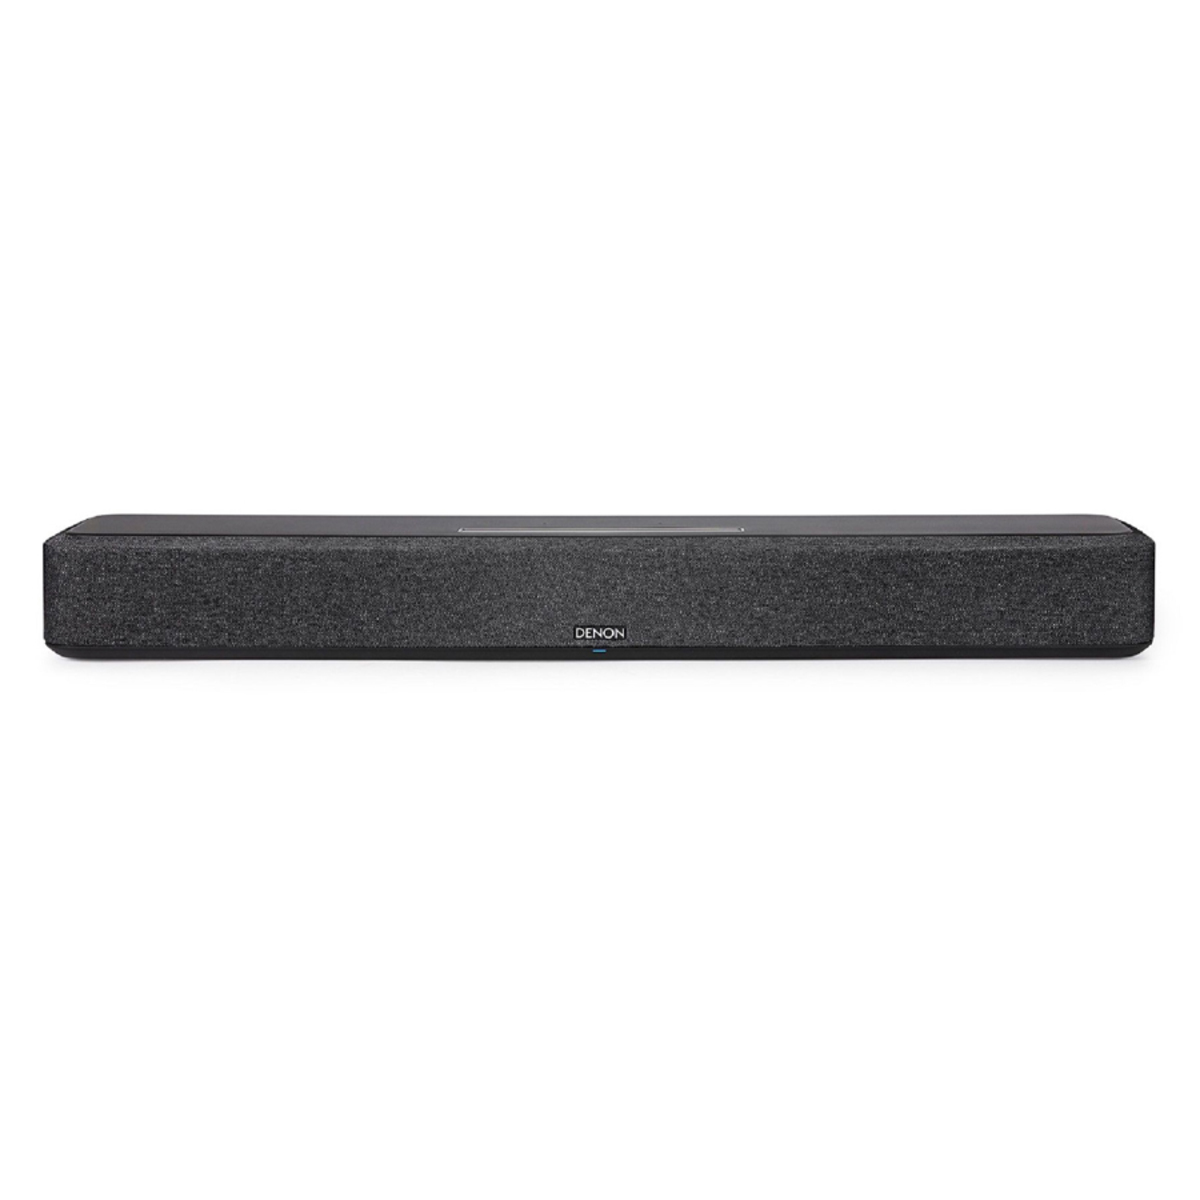 DENON Home Sound Bar 550 Smart Soundbar with Dolby Atmos and HEOS Built-in